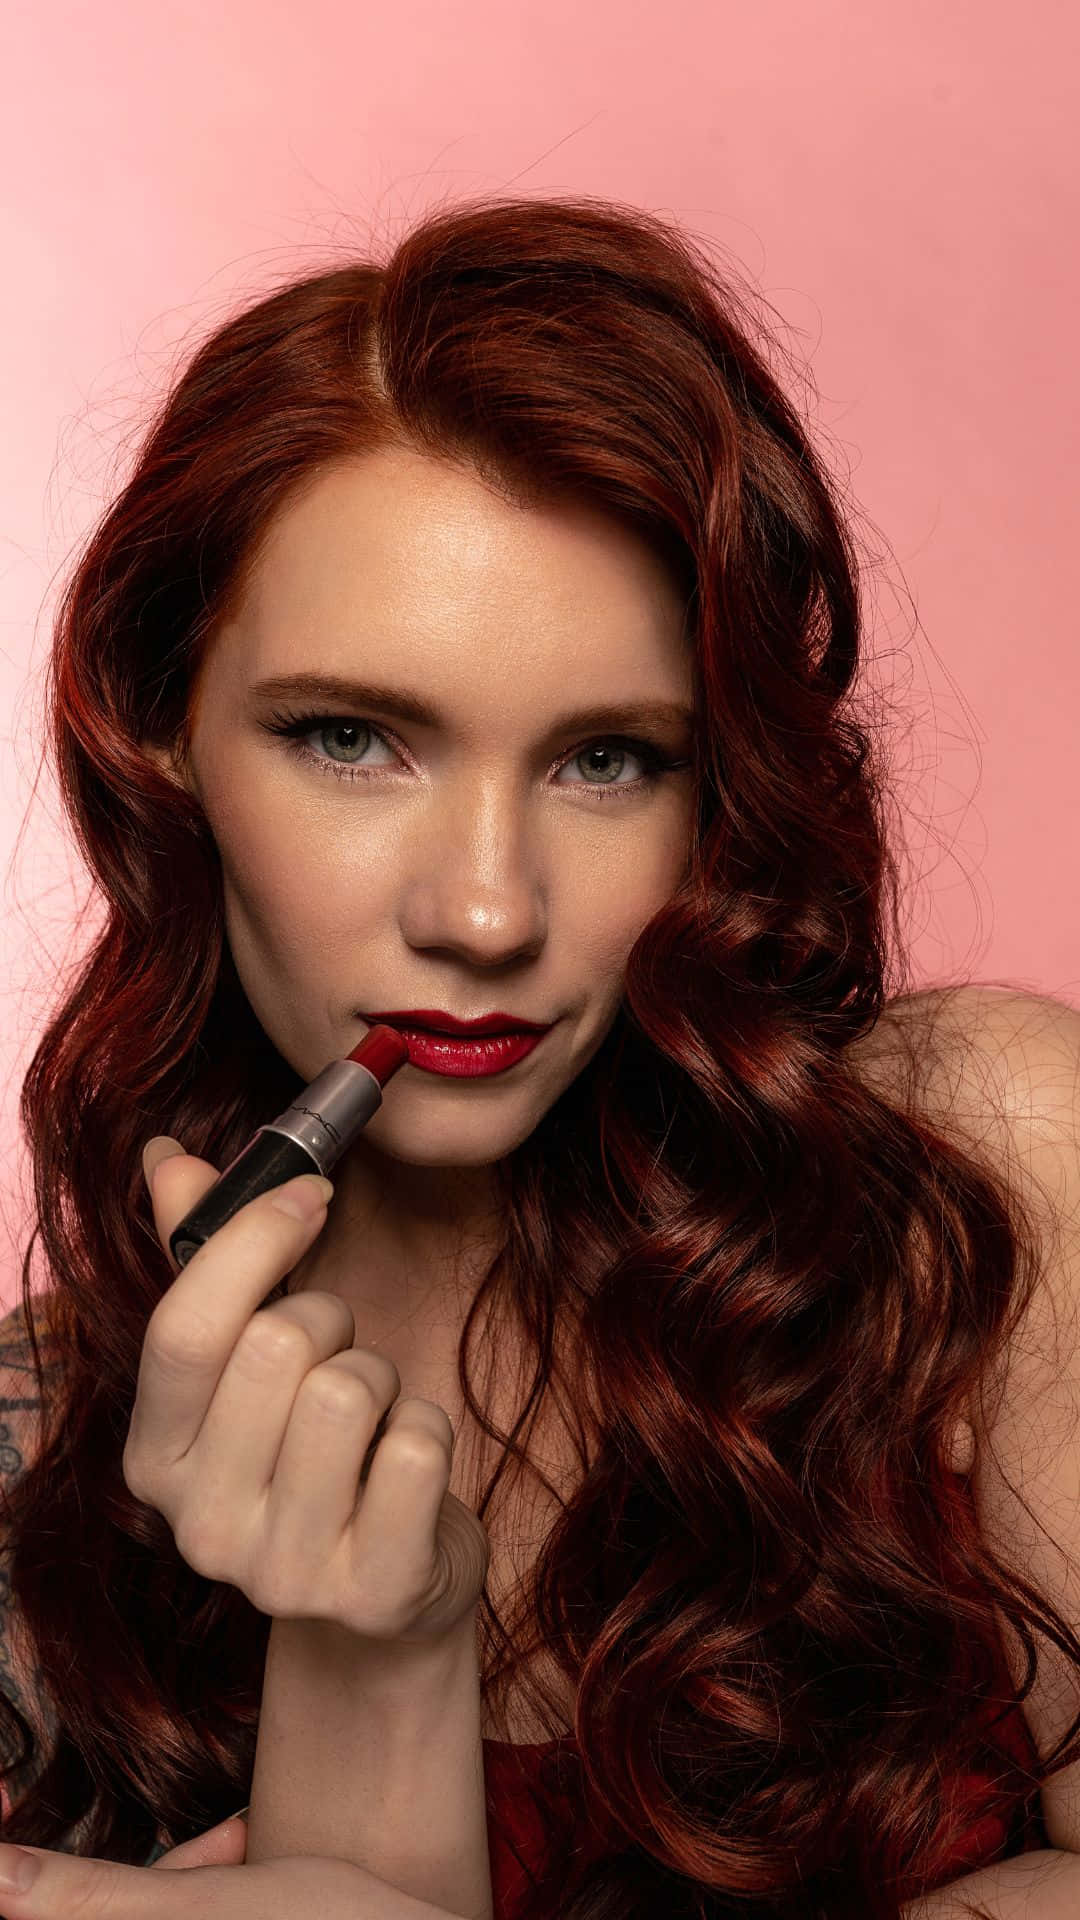 Redhead Applying Lipstick Aesthetic Wallpaper